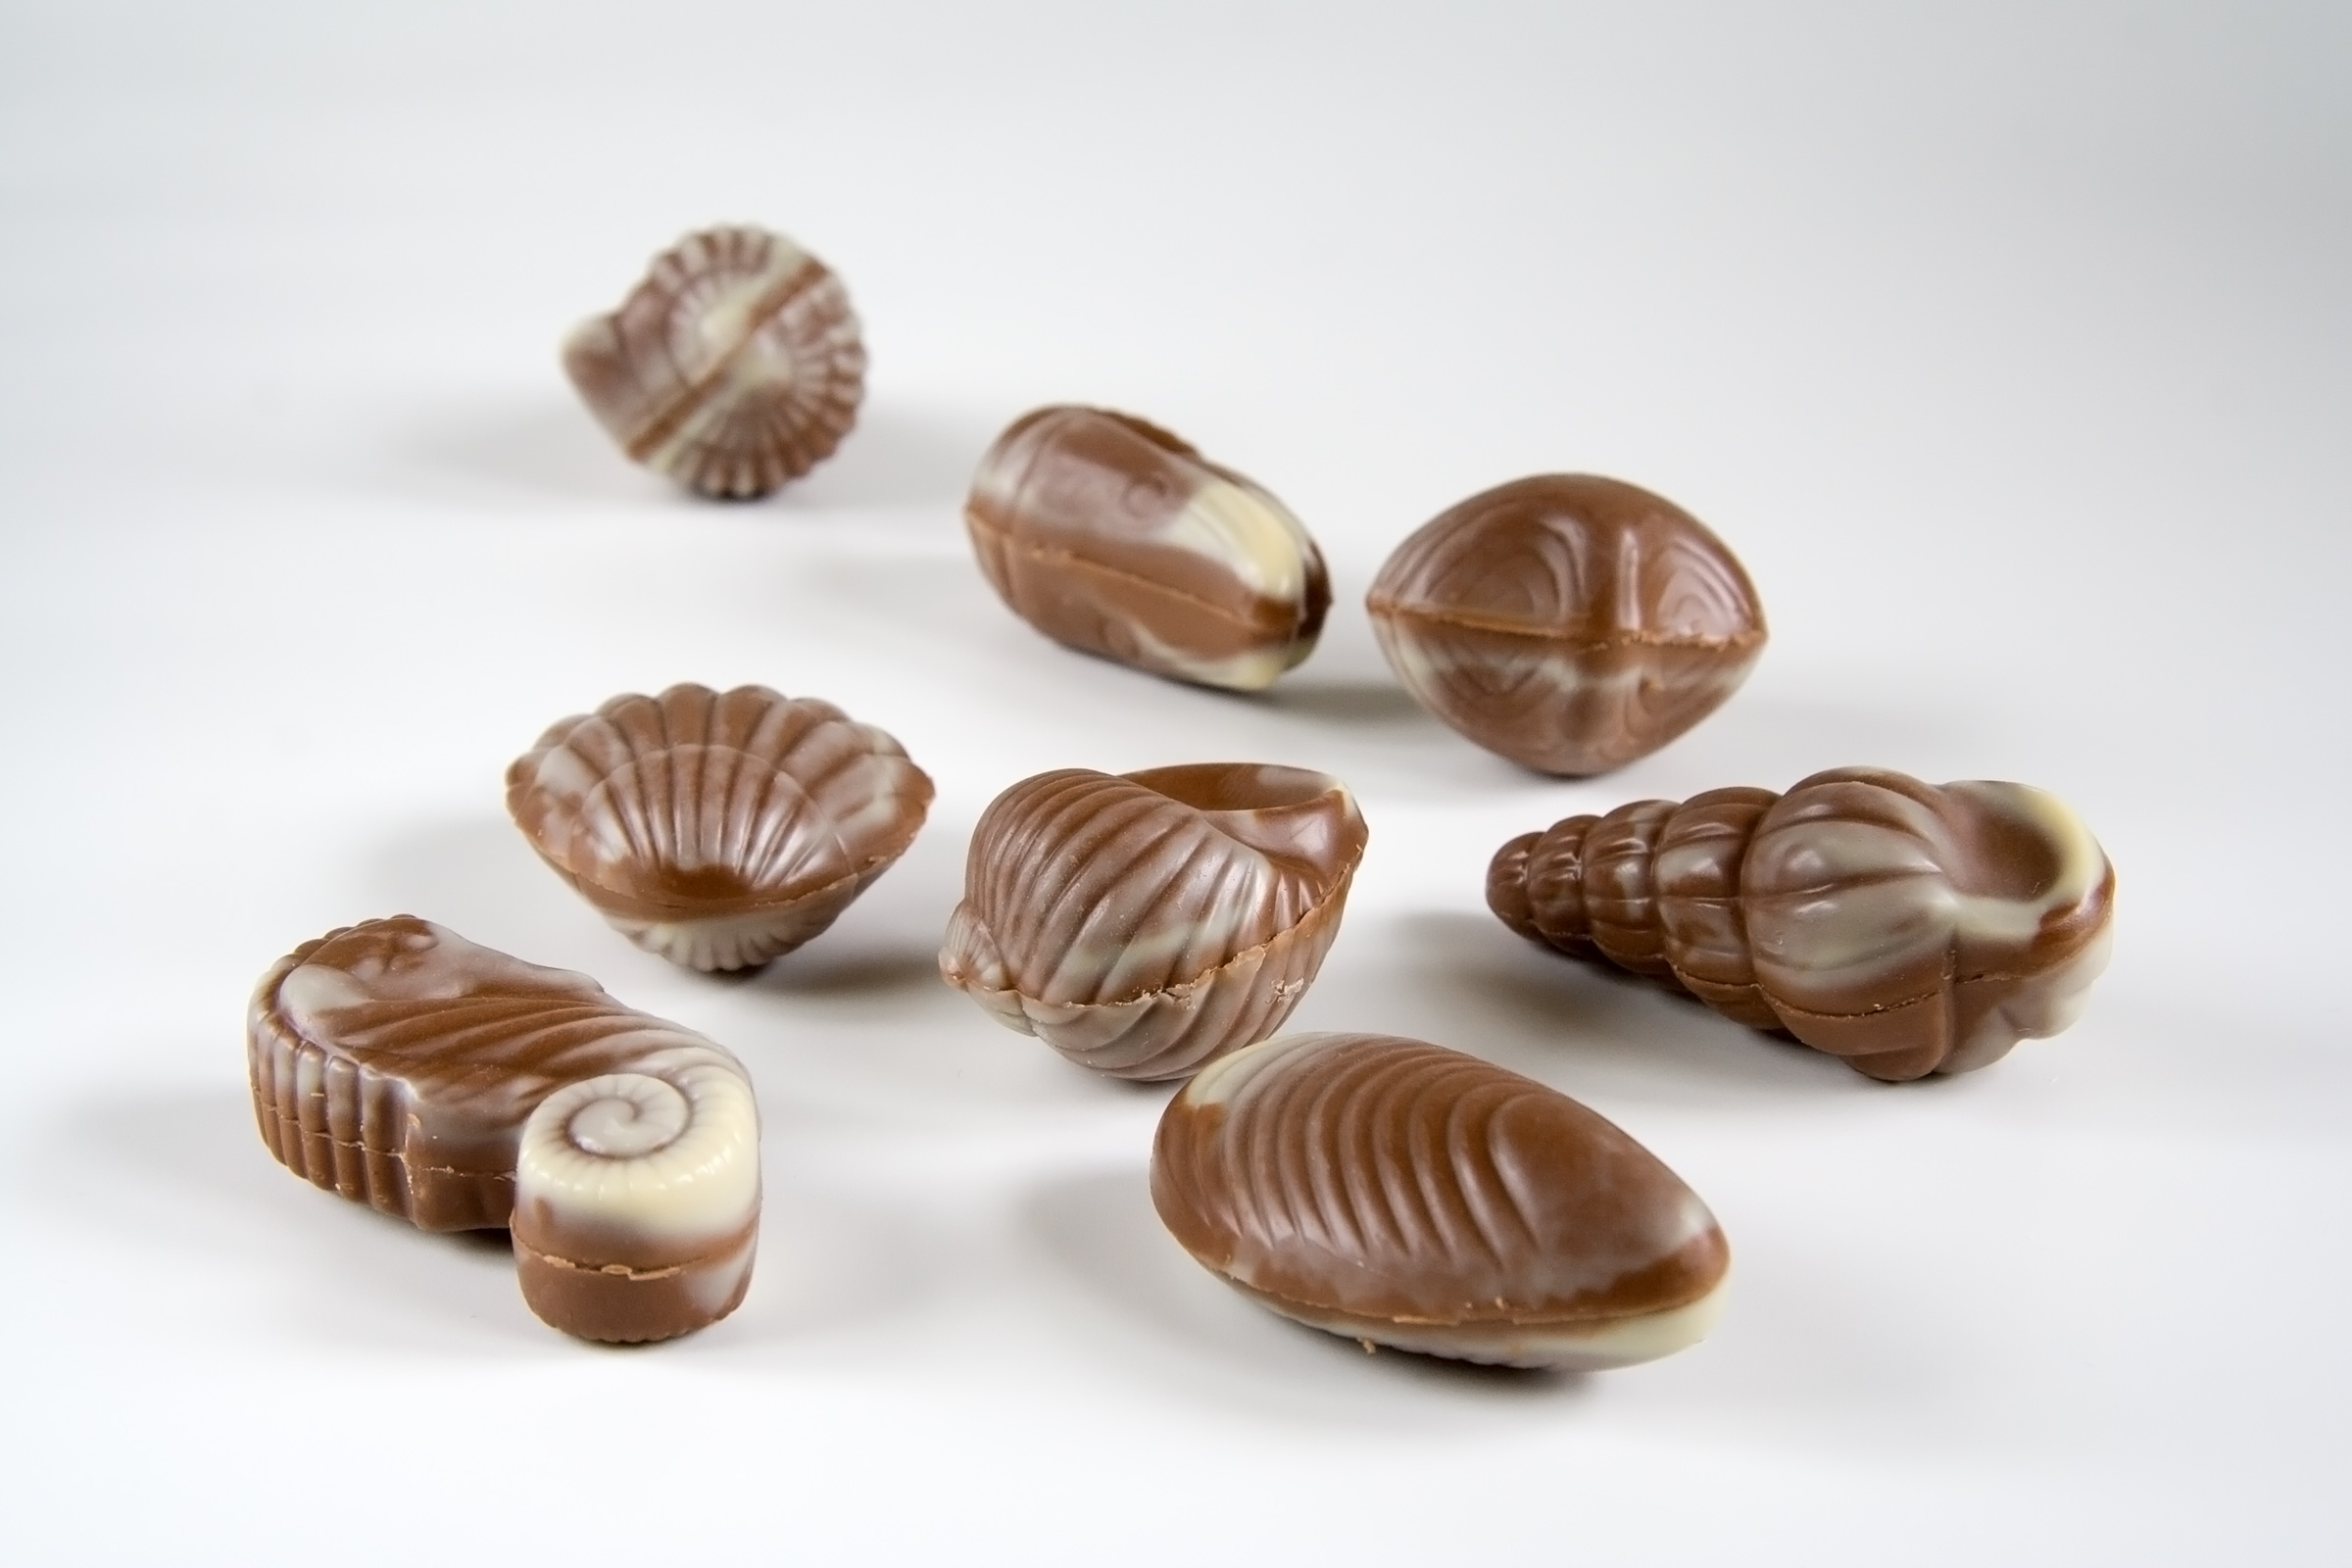 Chocolate shells